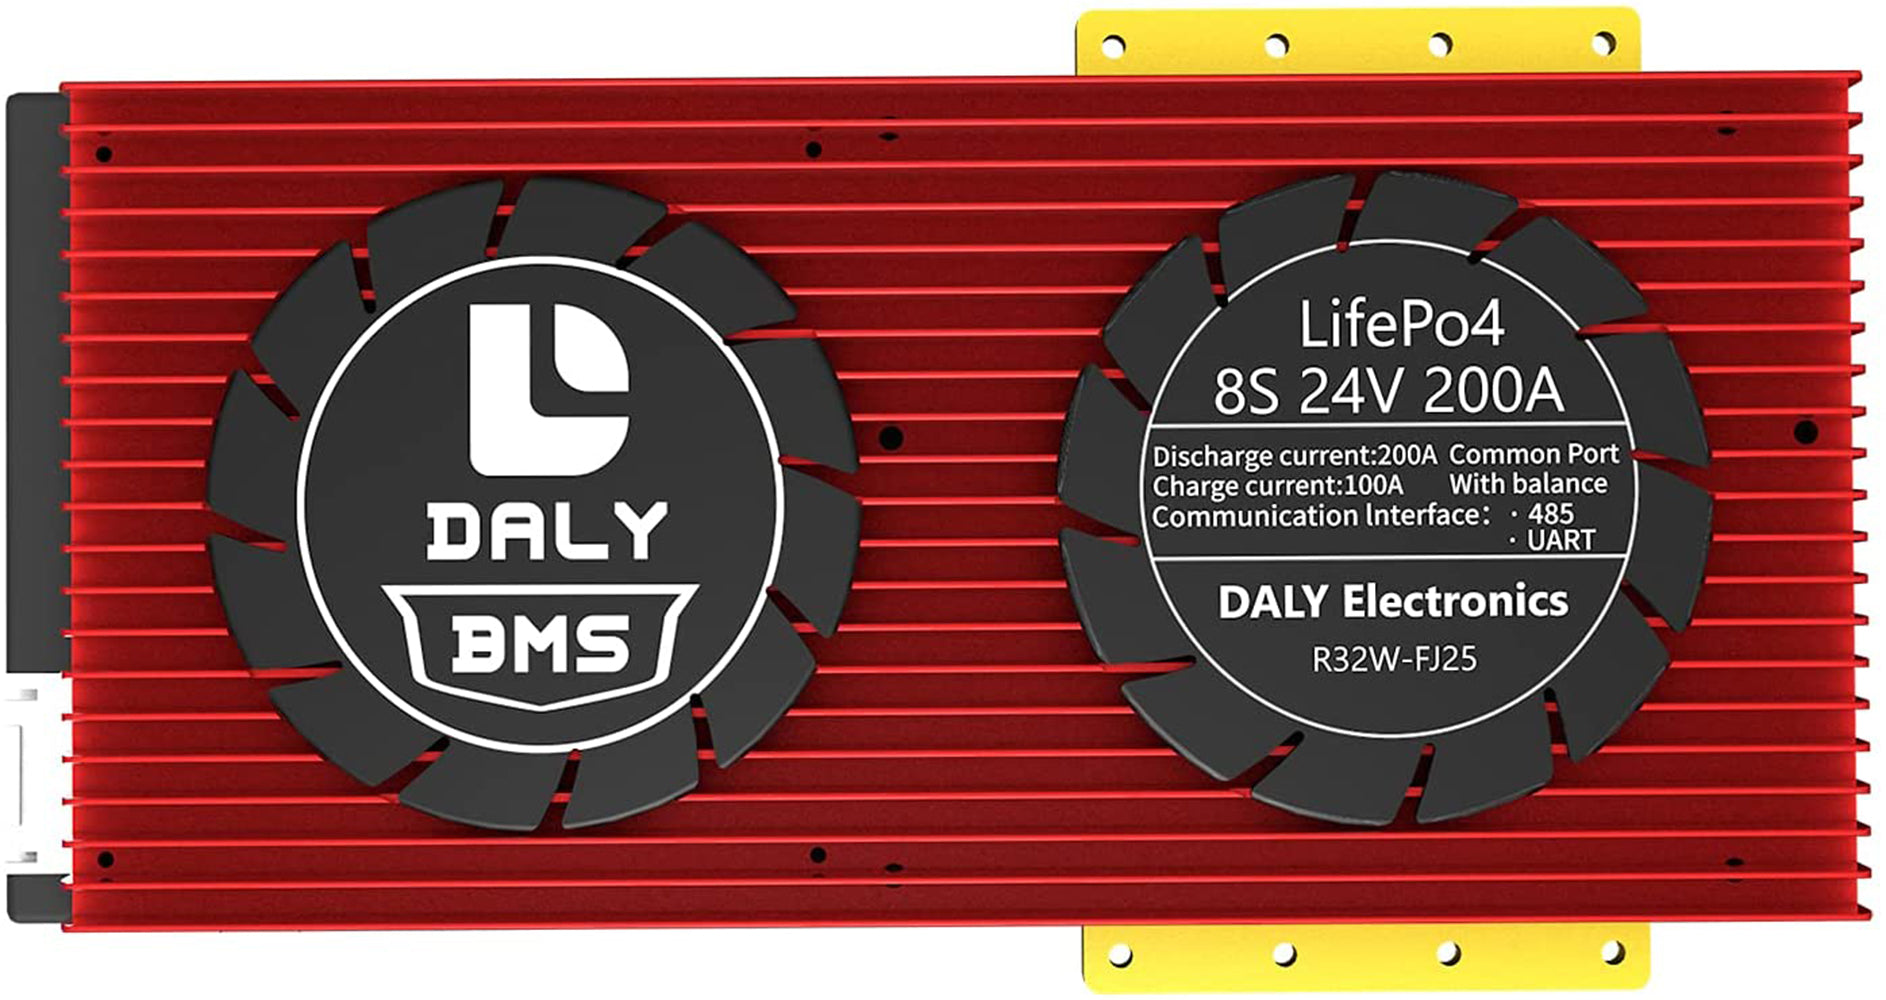 Daly smart bms Lifepo4 8S 24V 200A  bluetooth BMS board 32130221